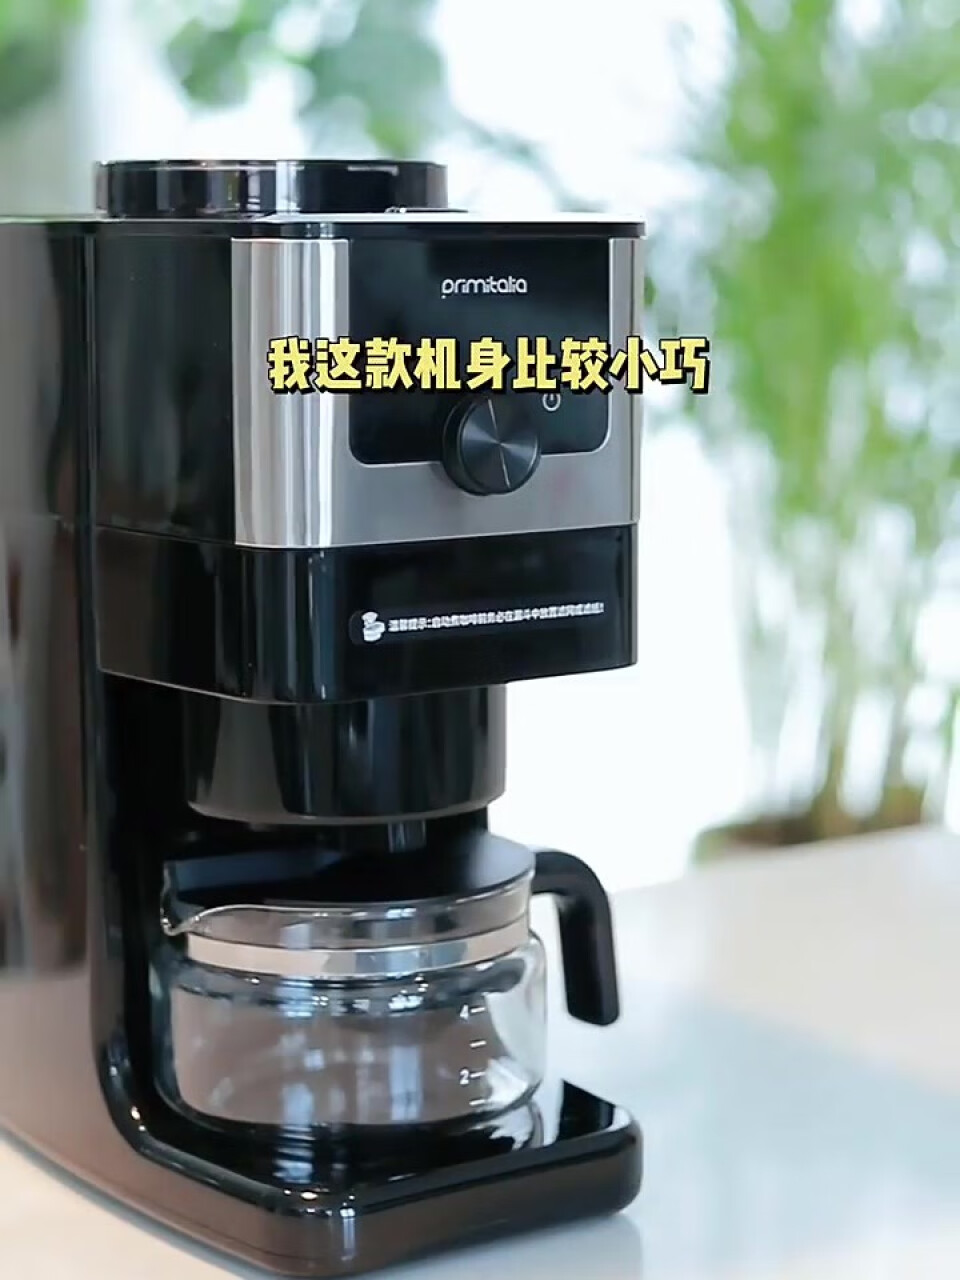 primitalia 浦美泰 美式咖啡机 咖啡机家用全自动 豆粉两用 咖啡豆研磨防堵粉 GA60,第5张